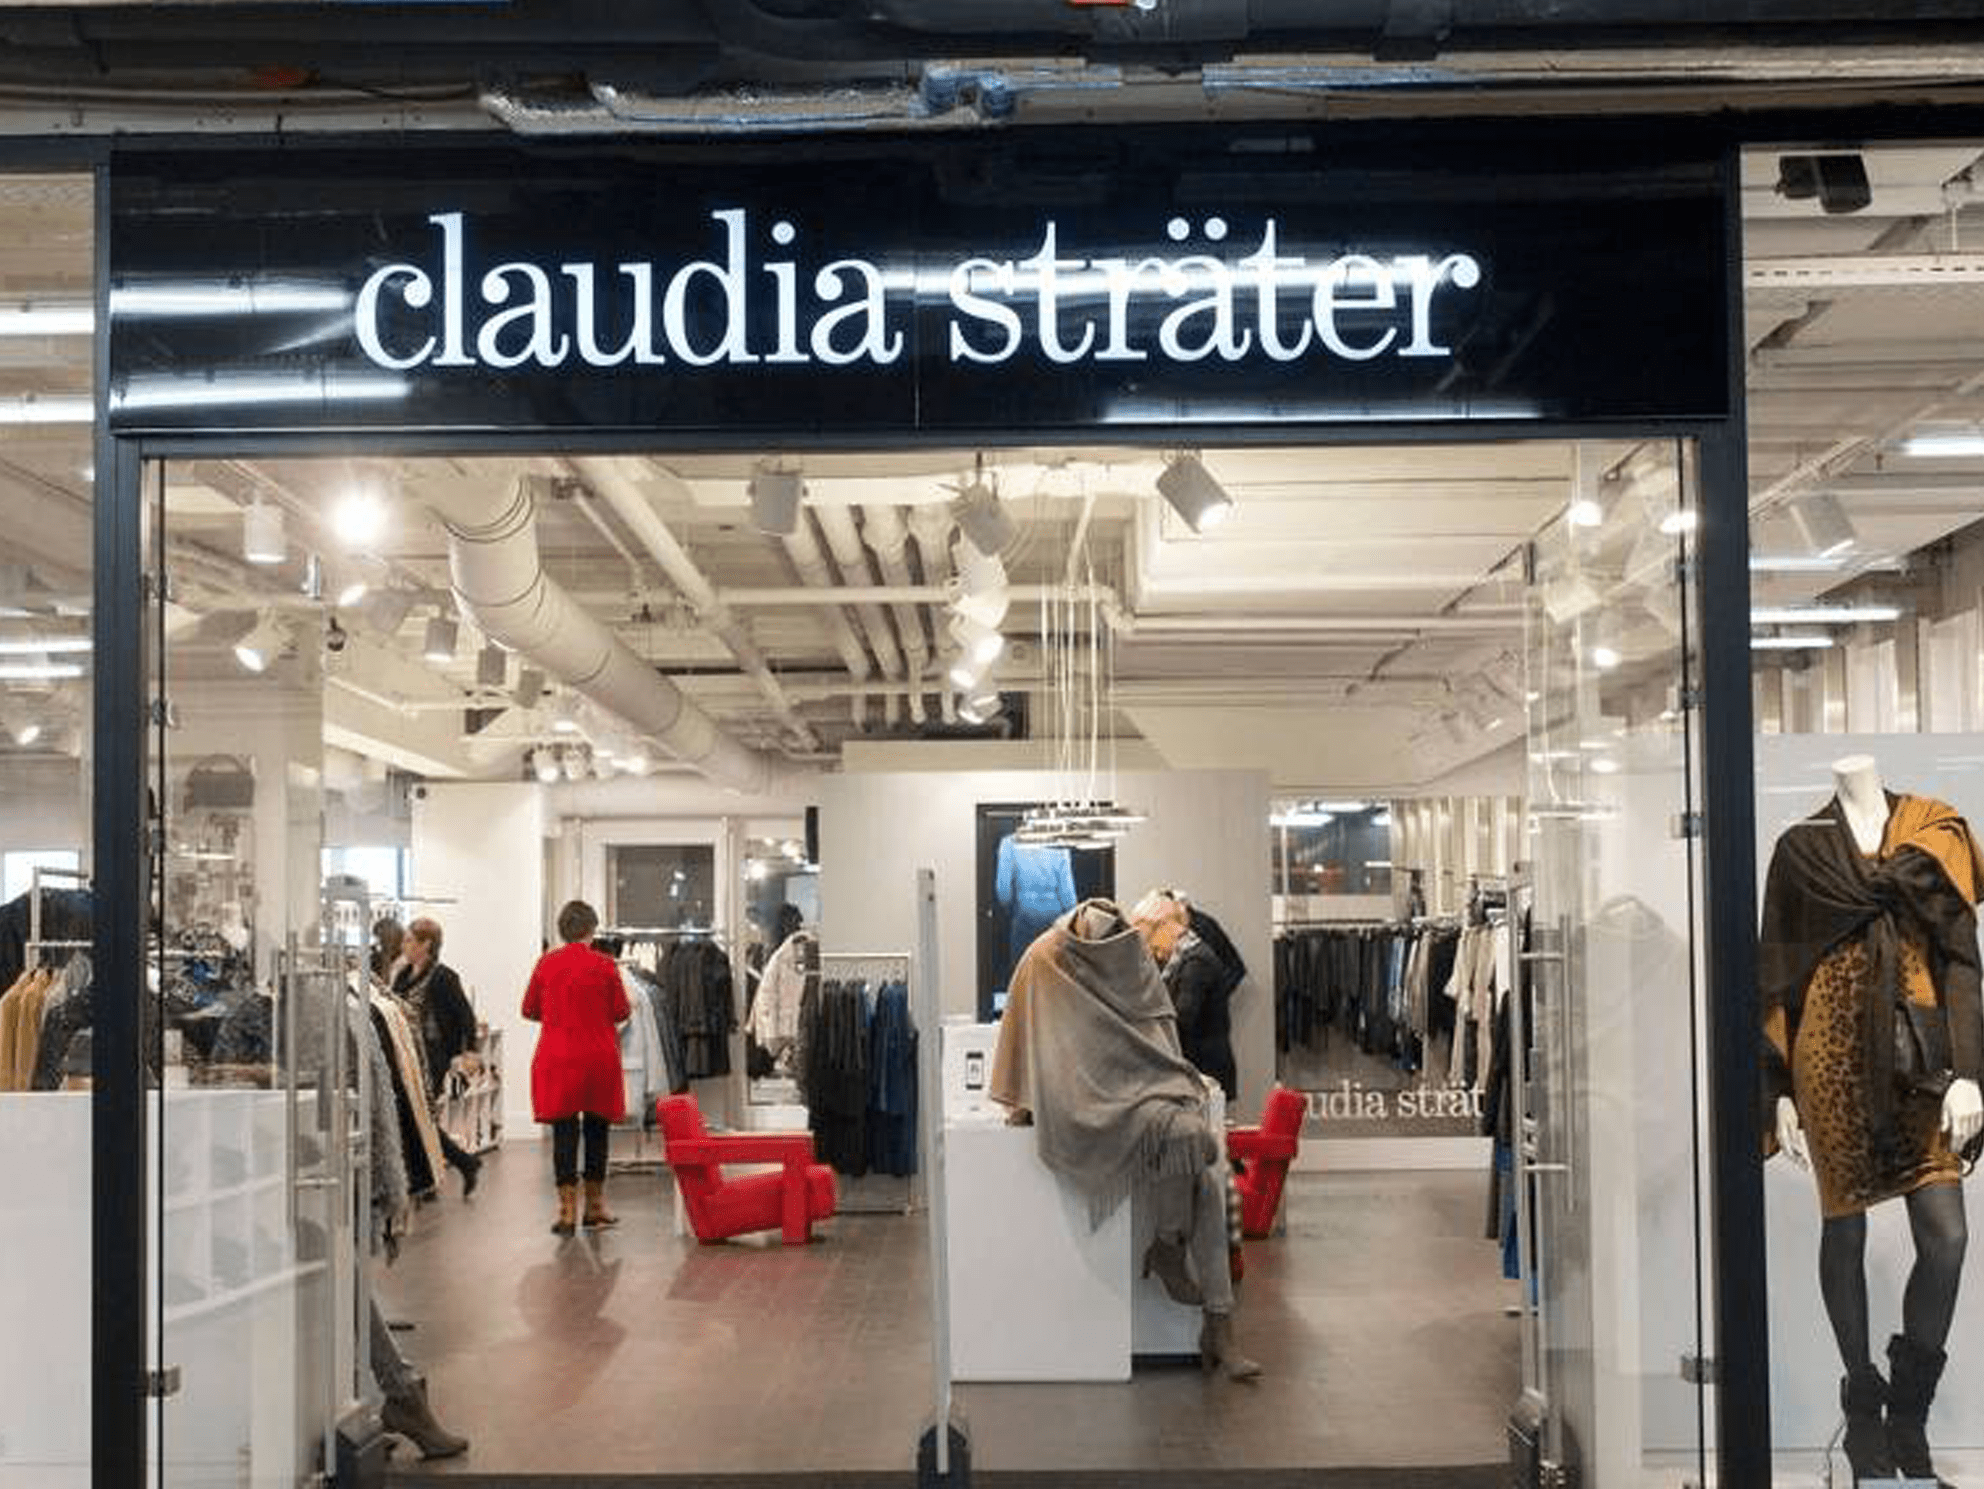 Featured image for “Claudia Sträter Diemen & Utrecht”